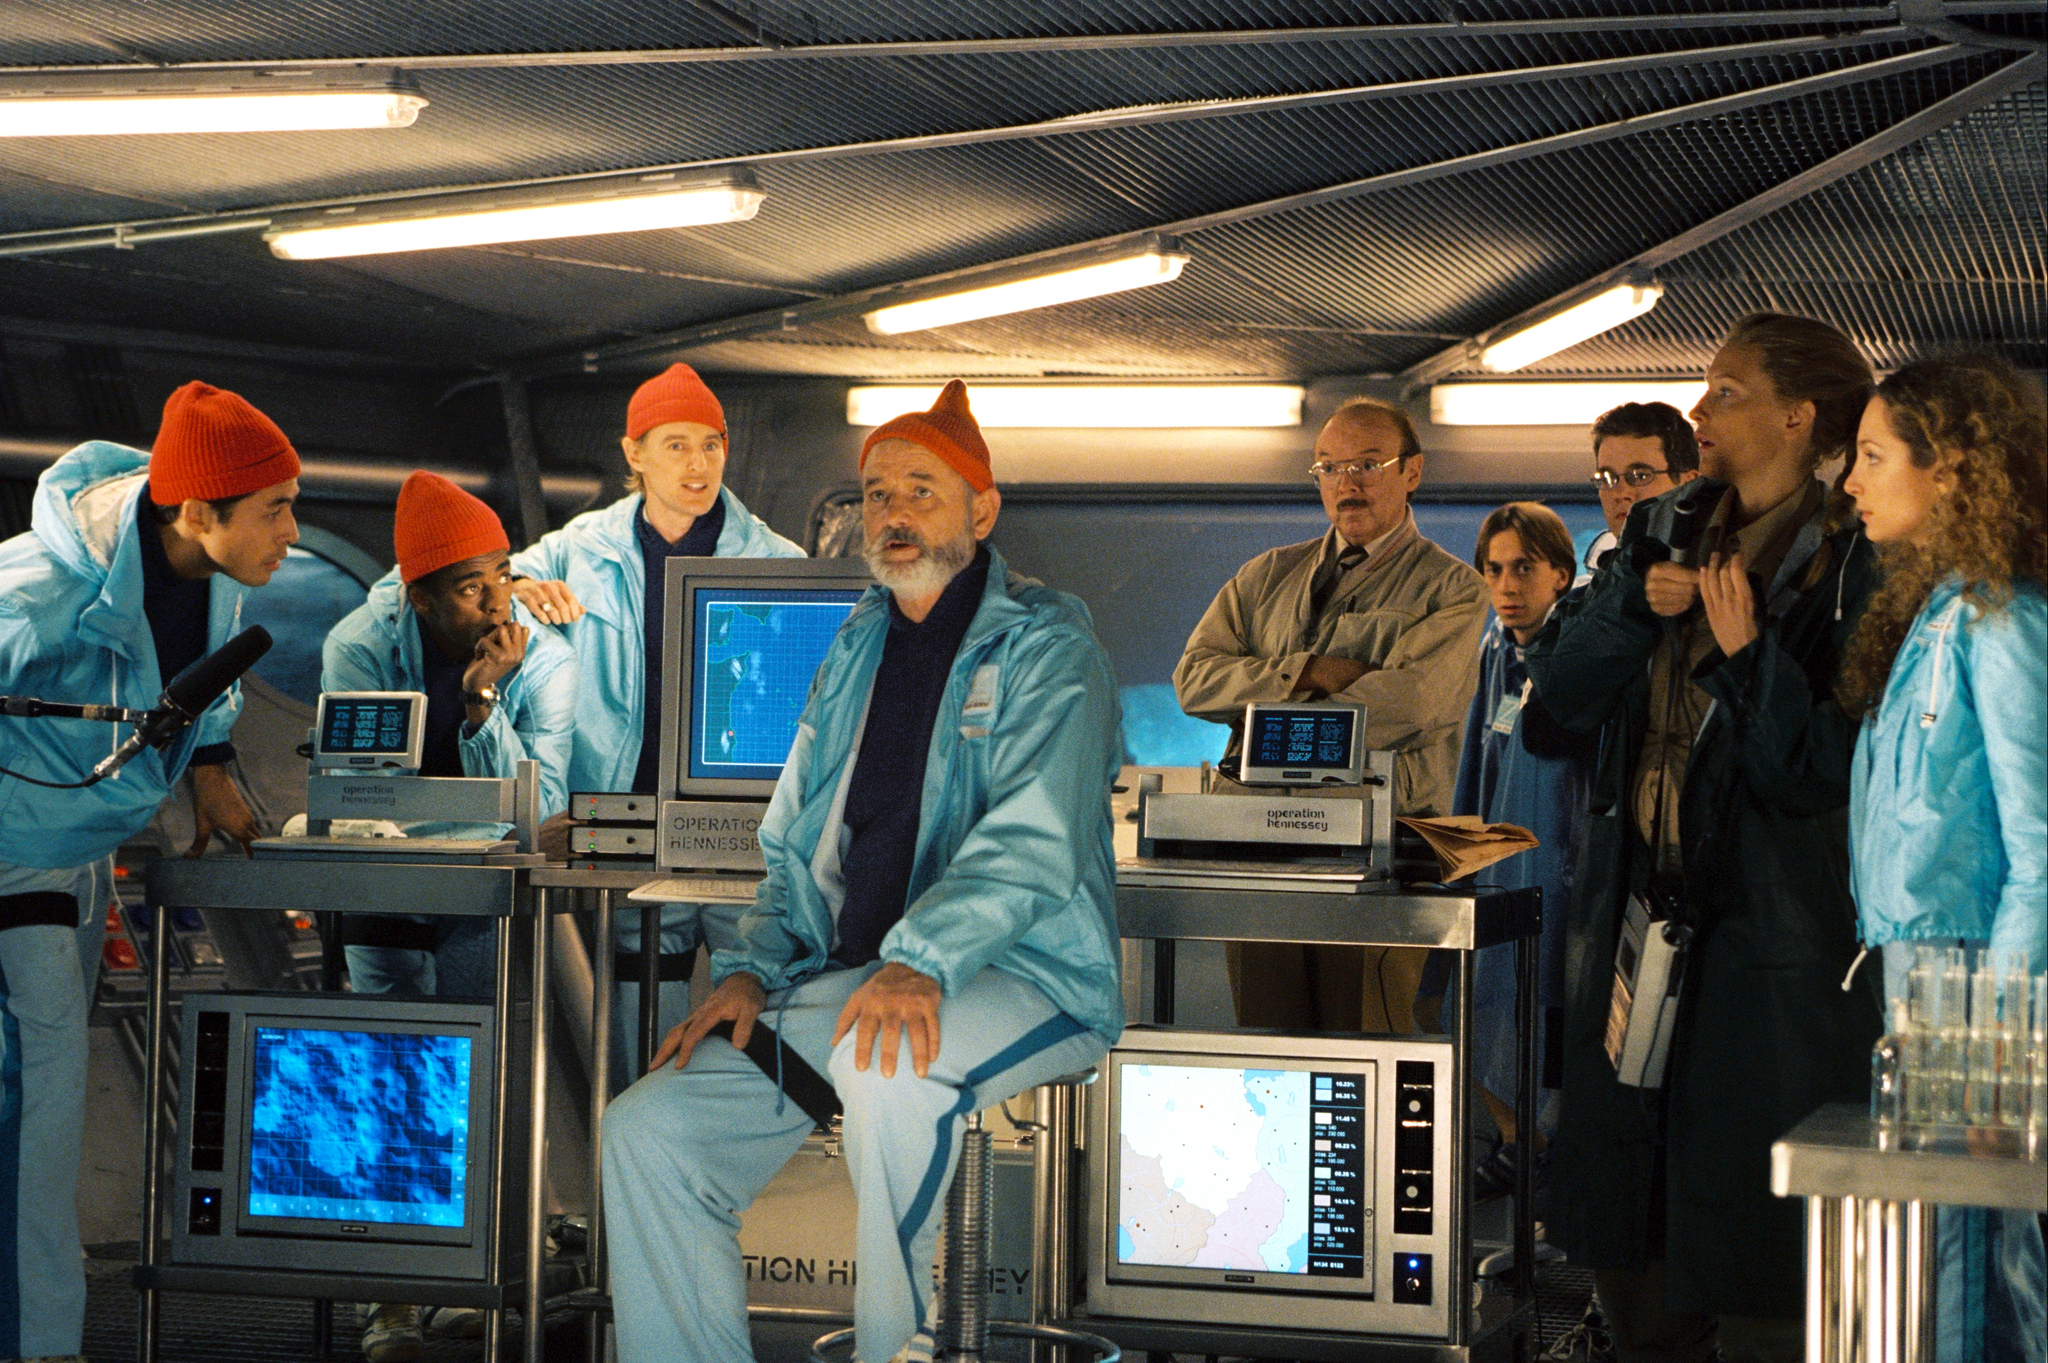 Still of Bill Murray, Cate Blanchett, Bud Cort, Owen Wilson, Robyn Cohen and Seu Jorge in The Life Aquatic with Steve Zissou (2004)